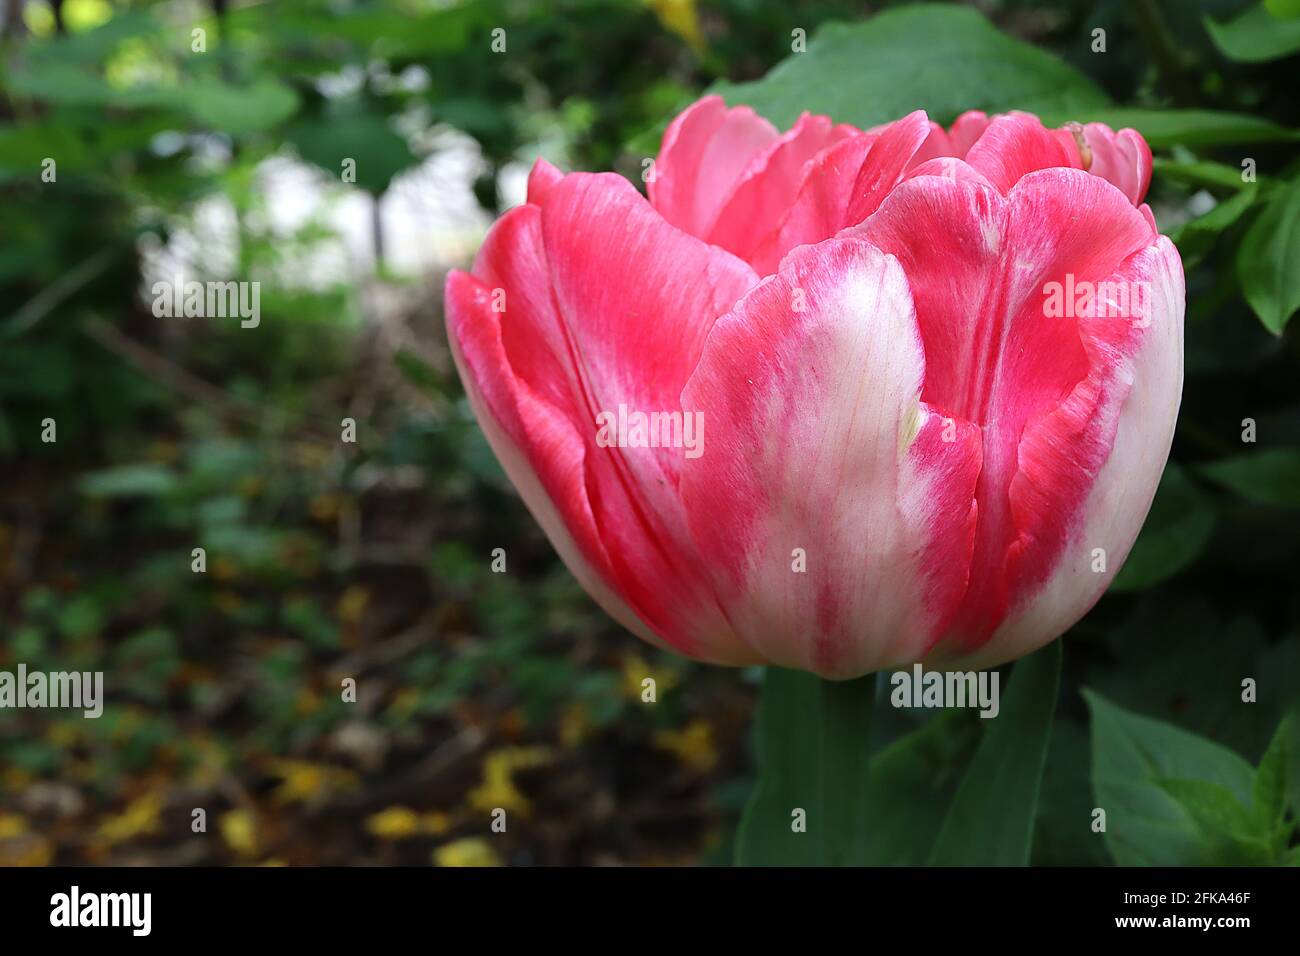 Tulipa ‘Foxtrot’ Double Early 2 Foxtrot Tulpe – tiefrosa Blüten, weiße Ränder, weiße Flamme, rosa Mittelrippe, April, England, Großbritannien Stockfoto